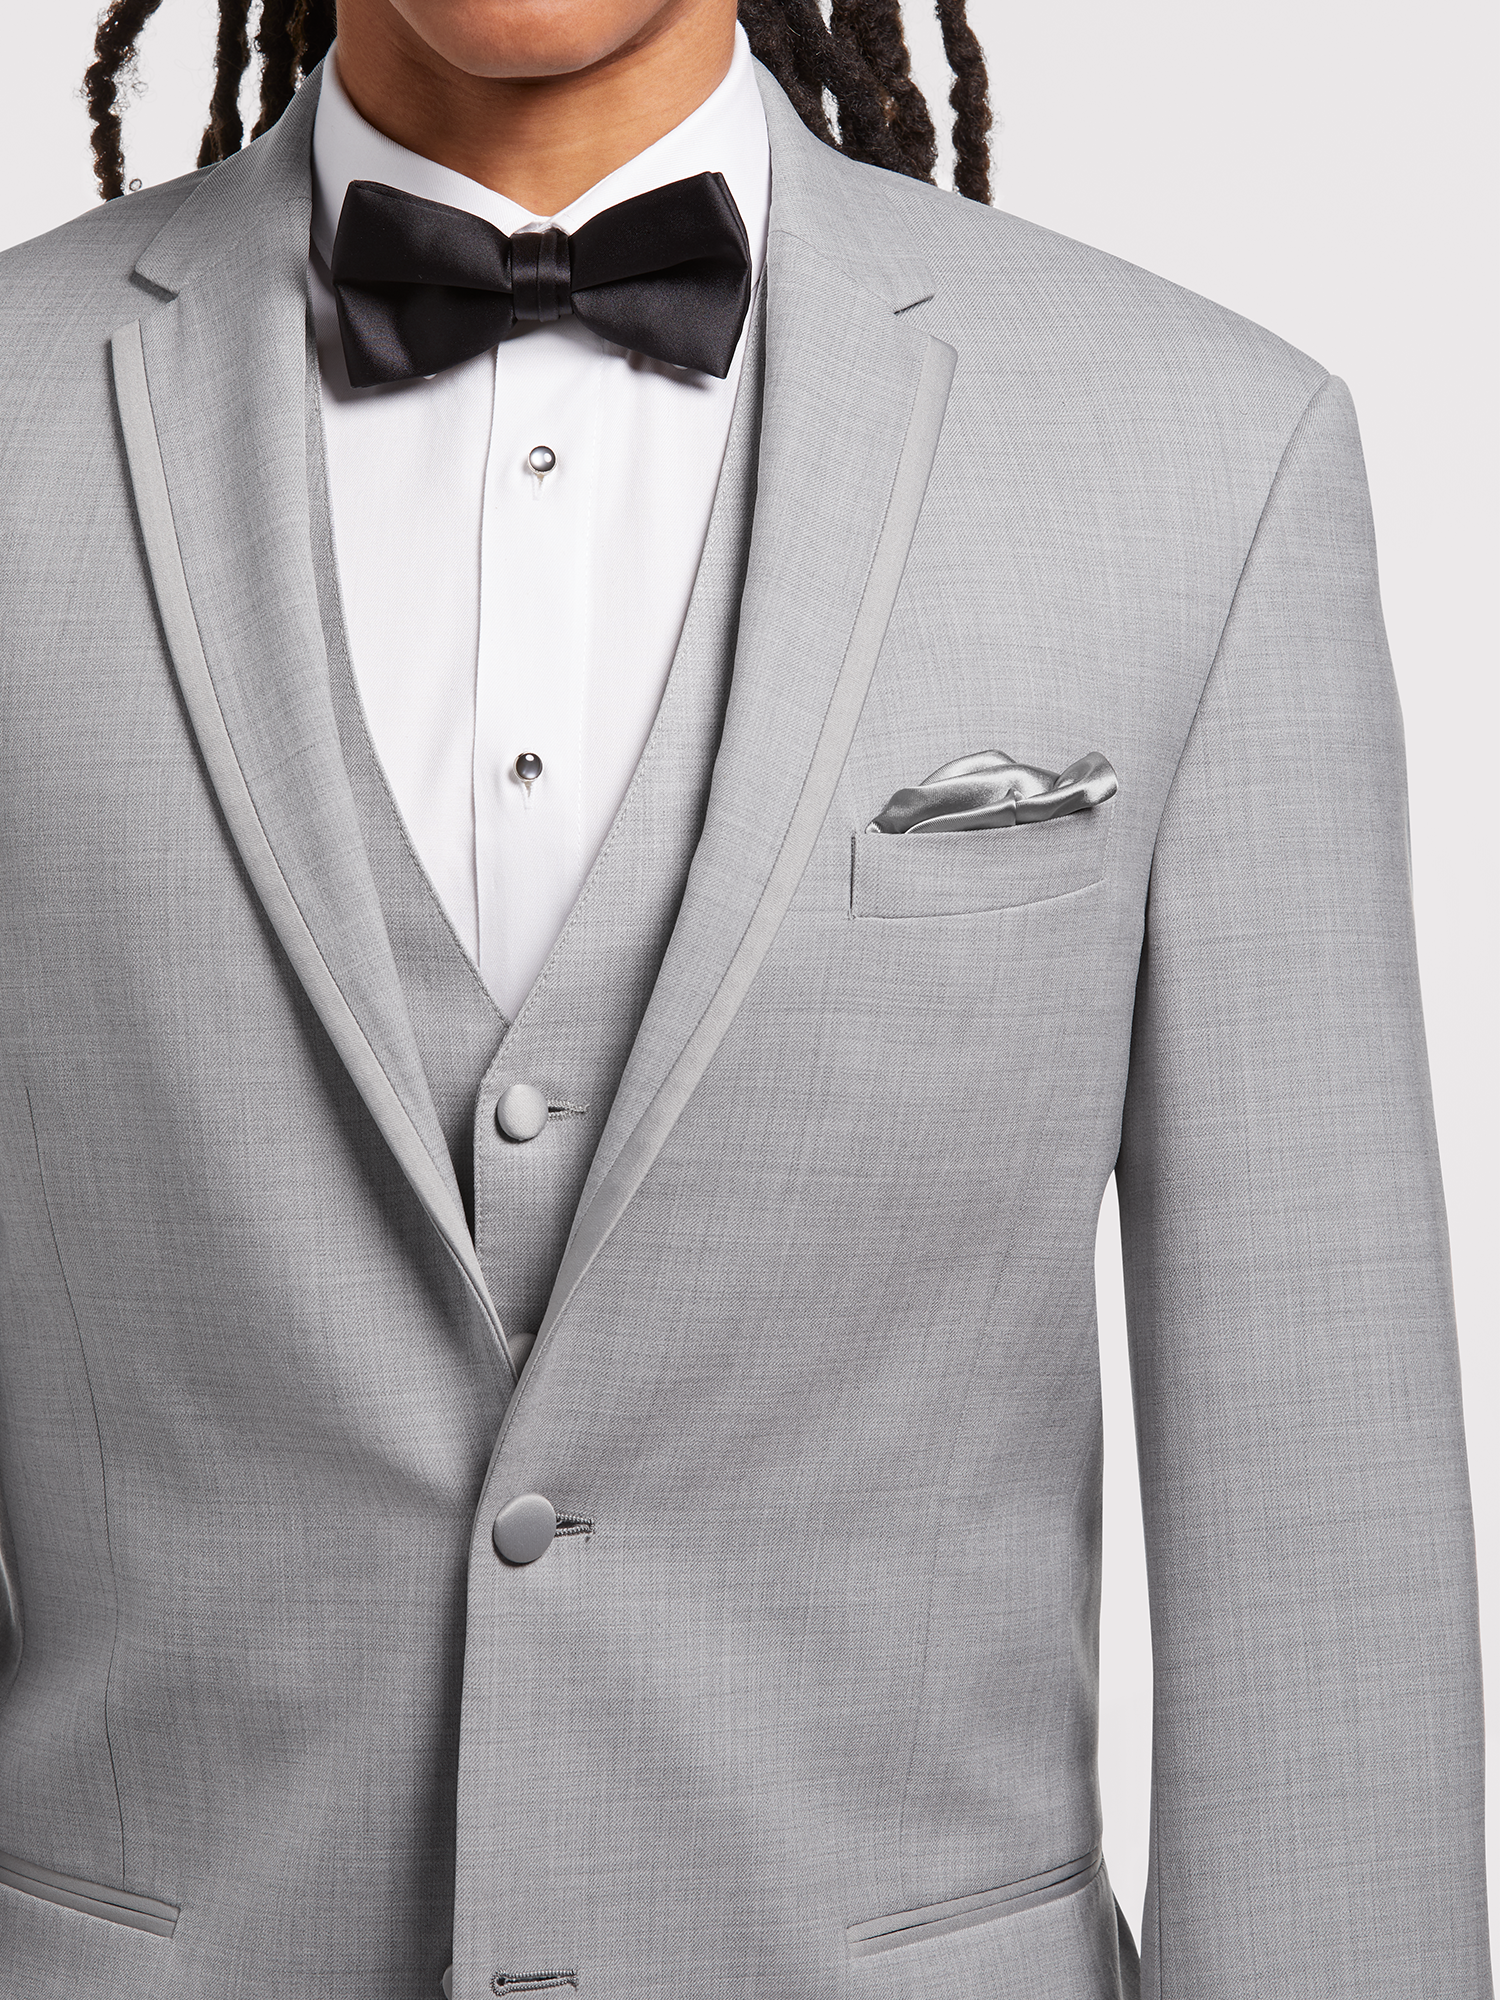 Custom Tailored Light Grey Tuxedo with Satin Trim